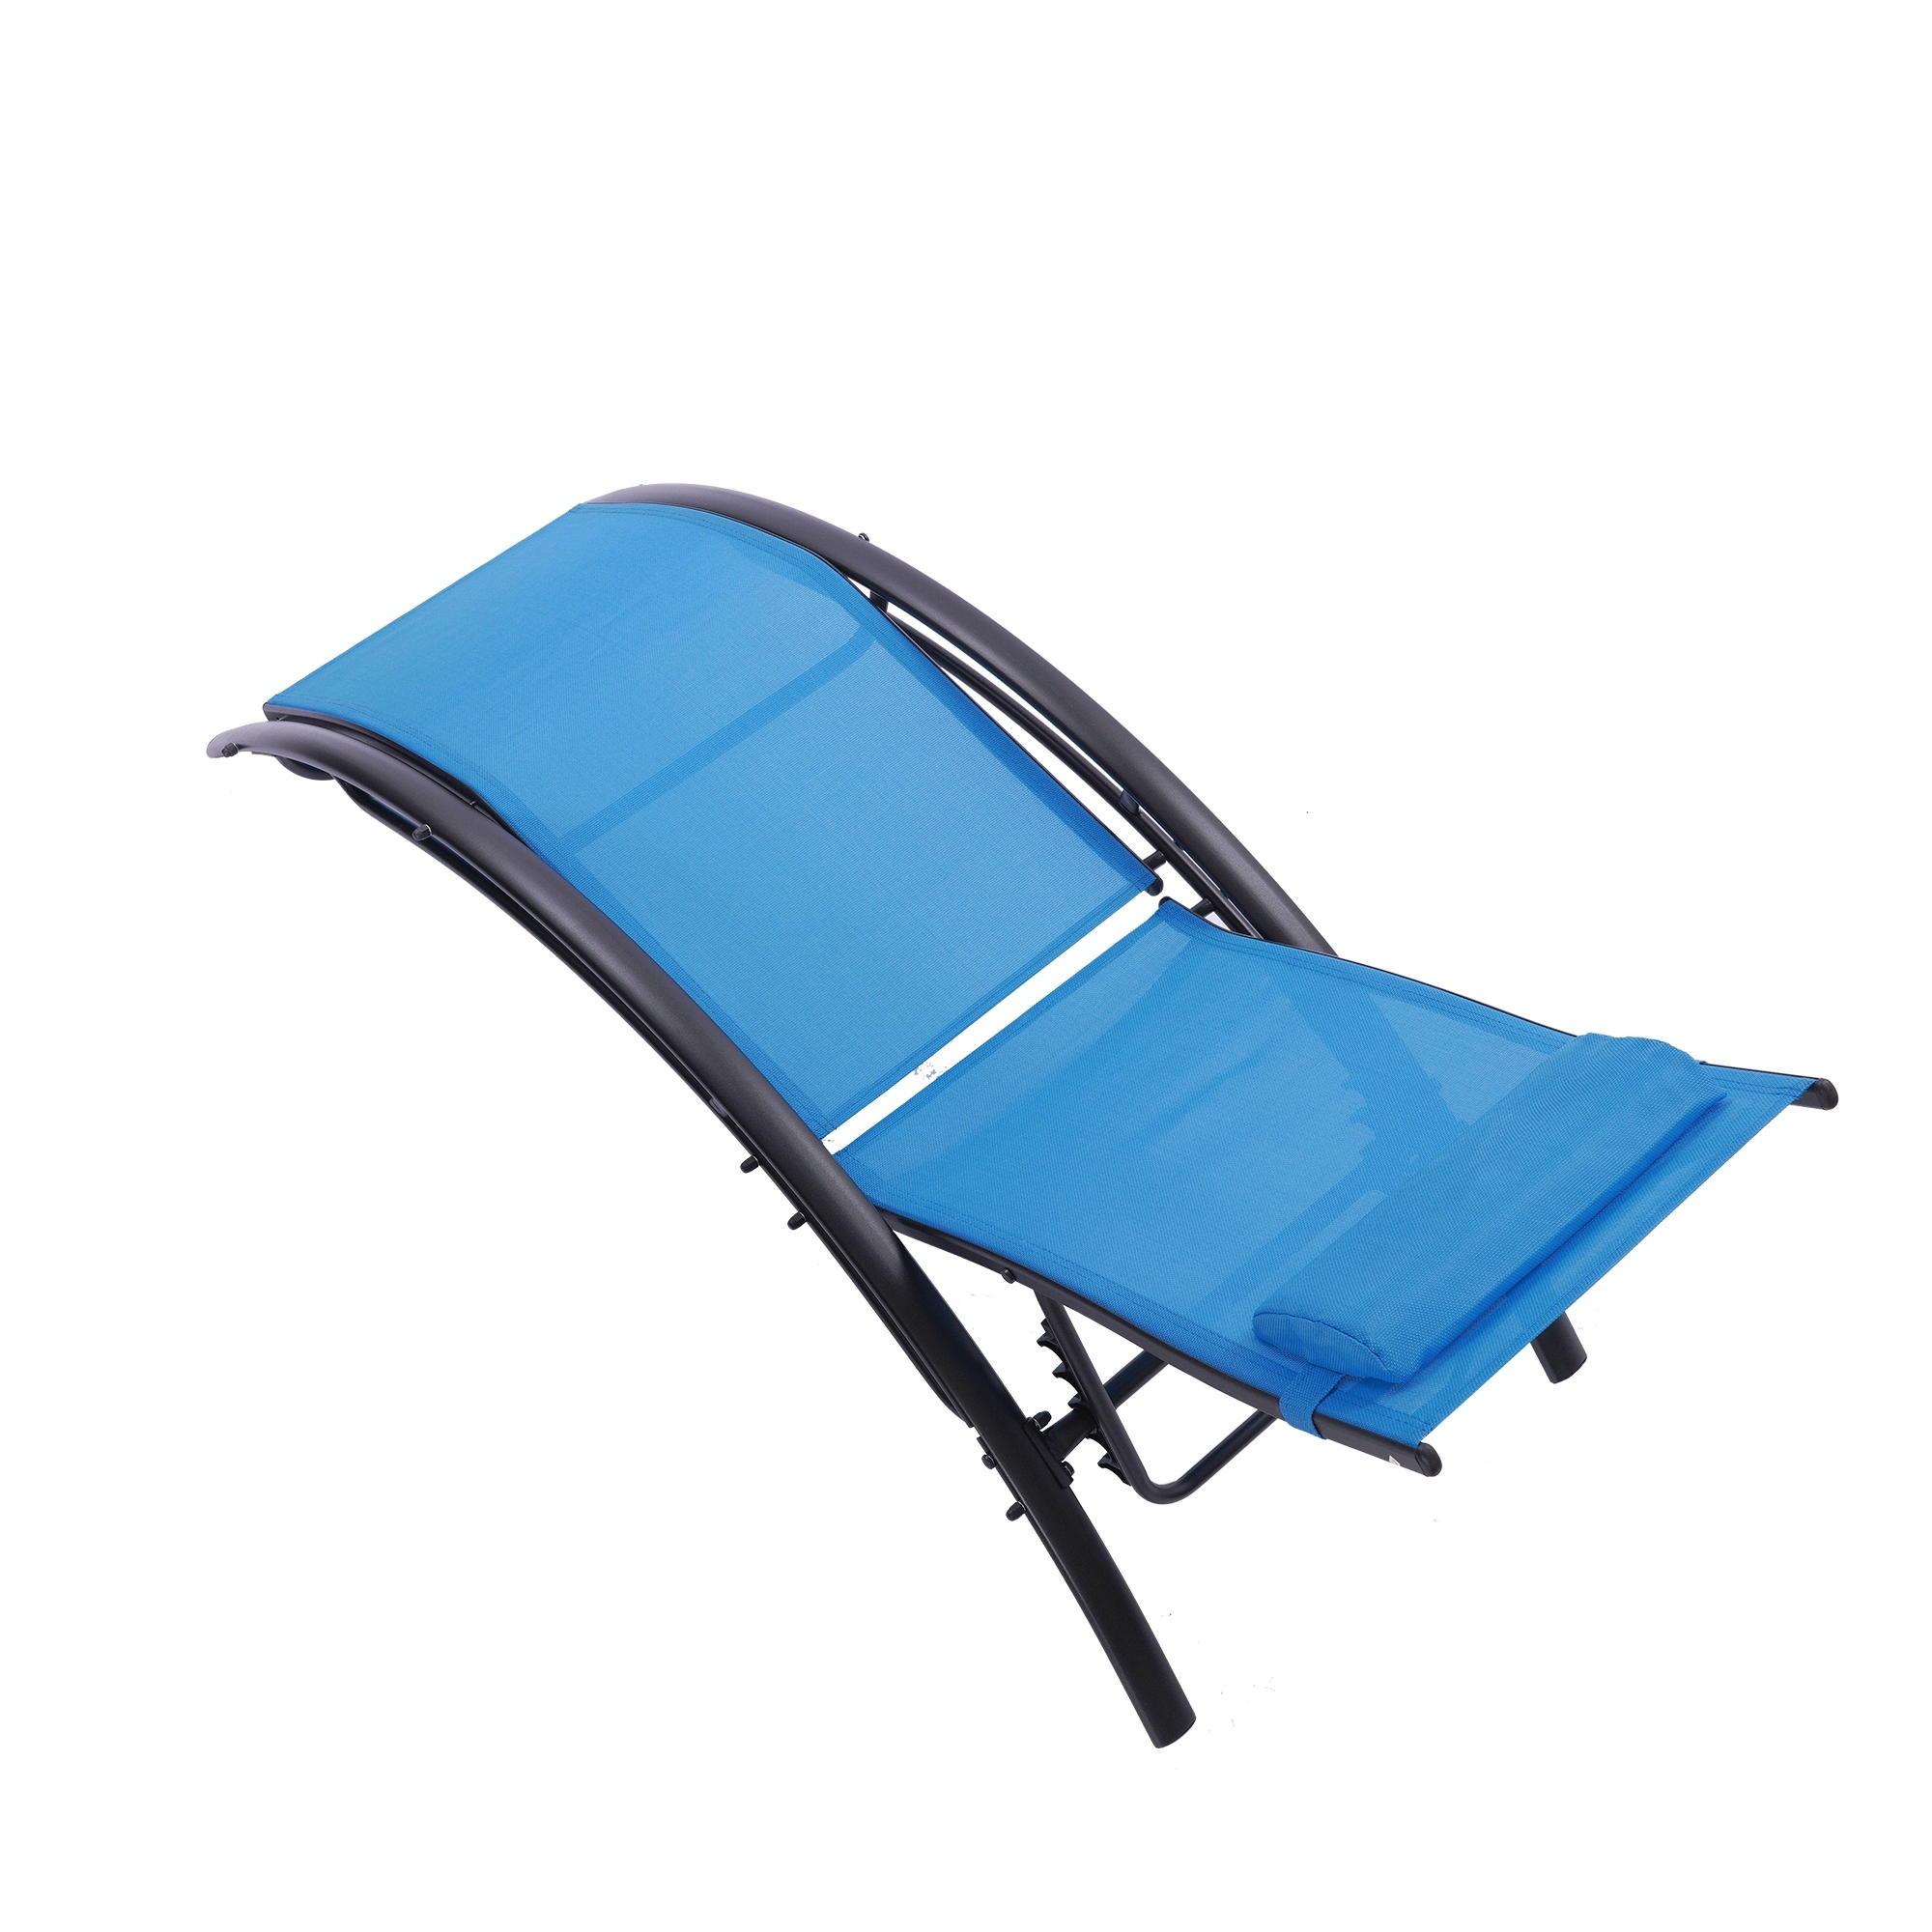 Hassch 2PCS Outdoor Chaise Lounges Aluminum Recliner Chair Beach Sun Chair, Blue - image 2 of 10